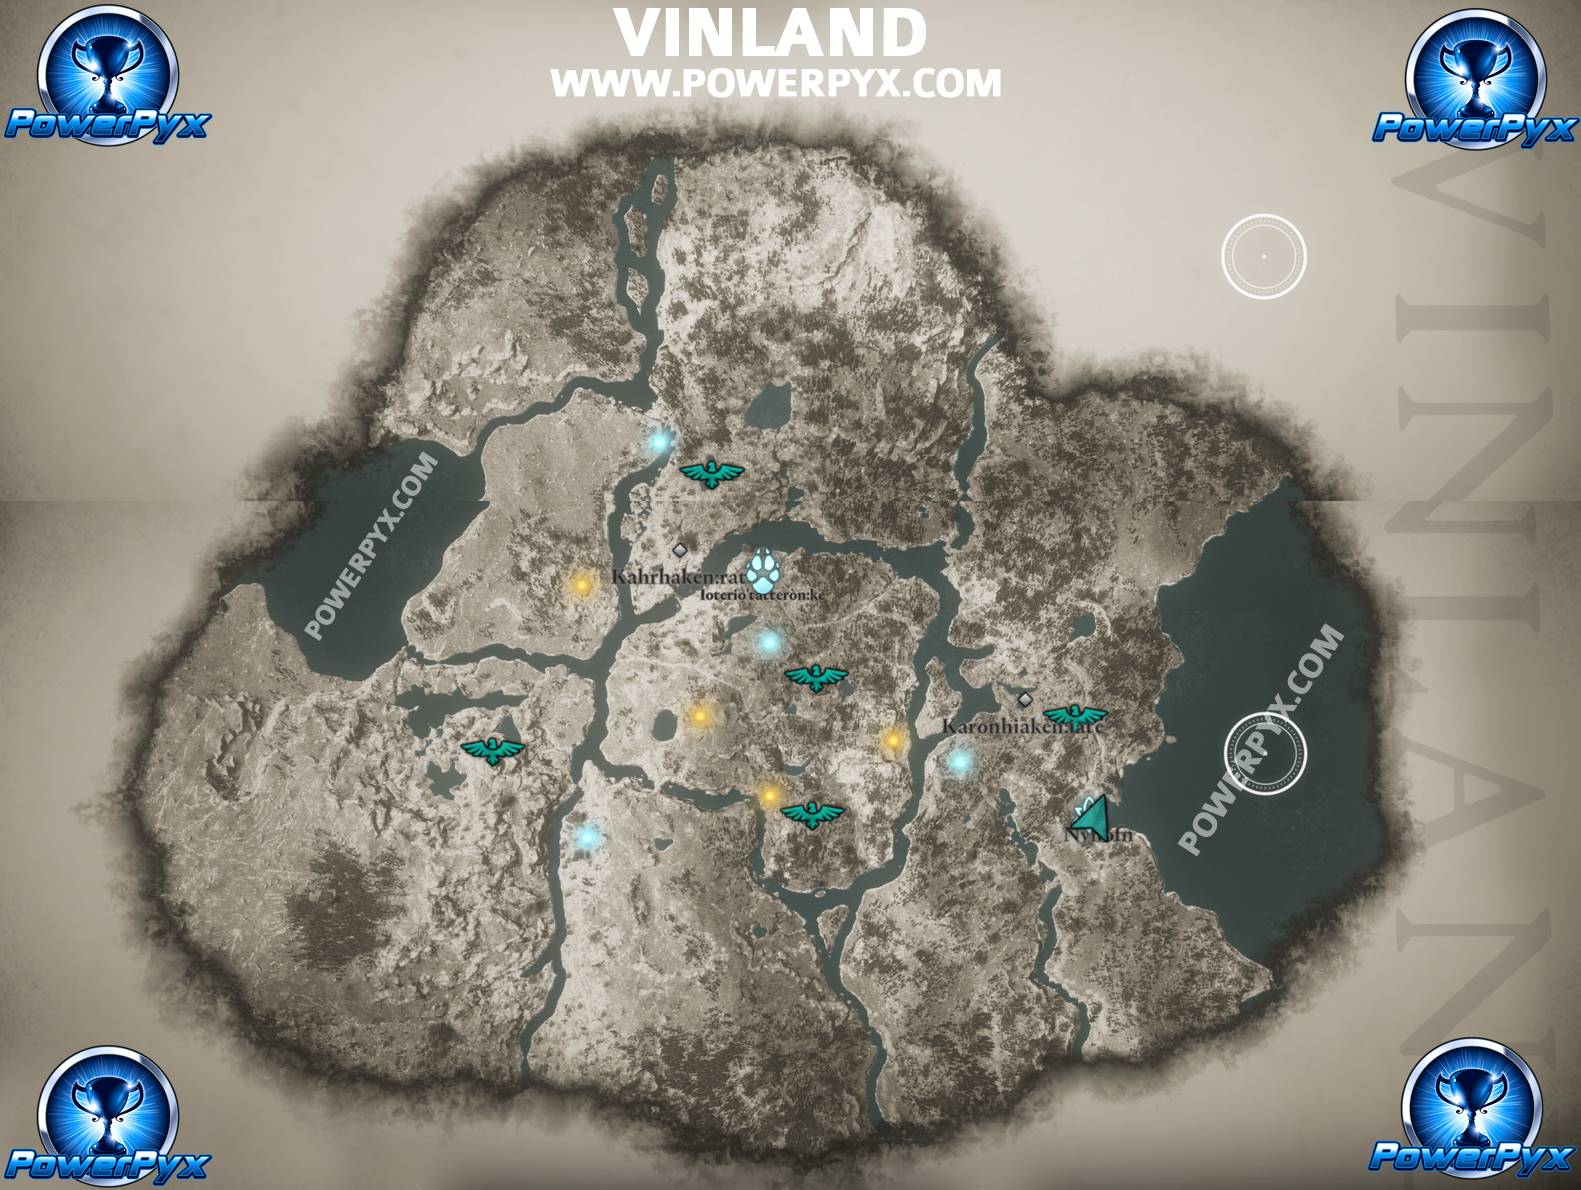 Assassins Creed Valhalla Vinland Map 